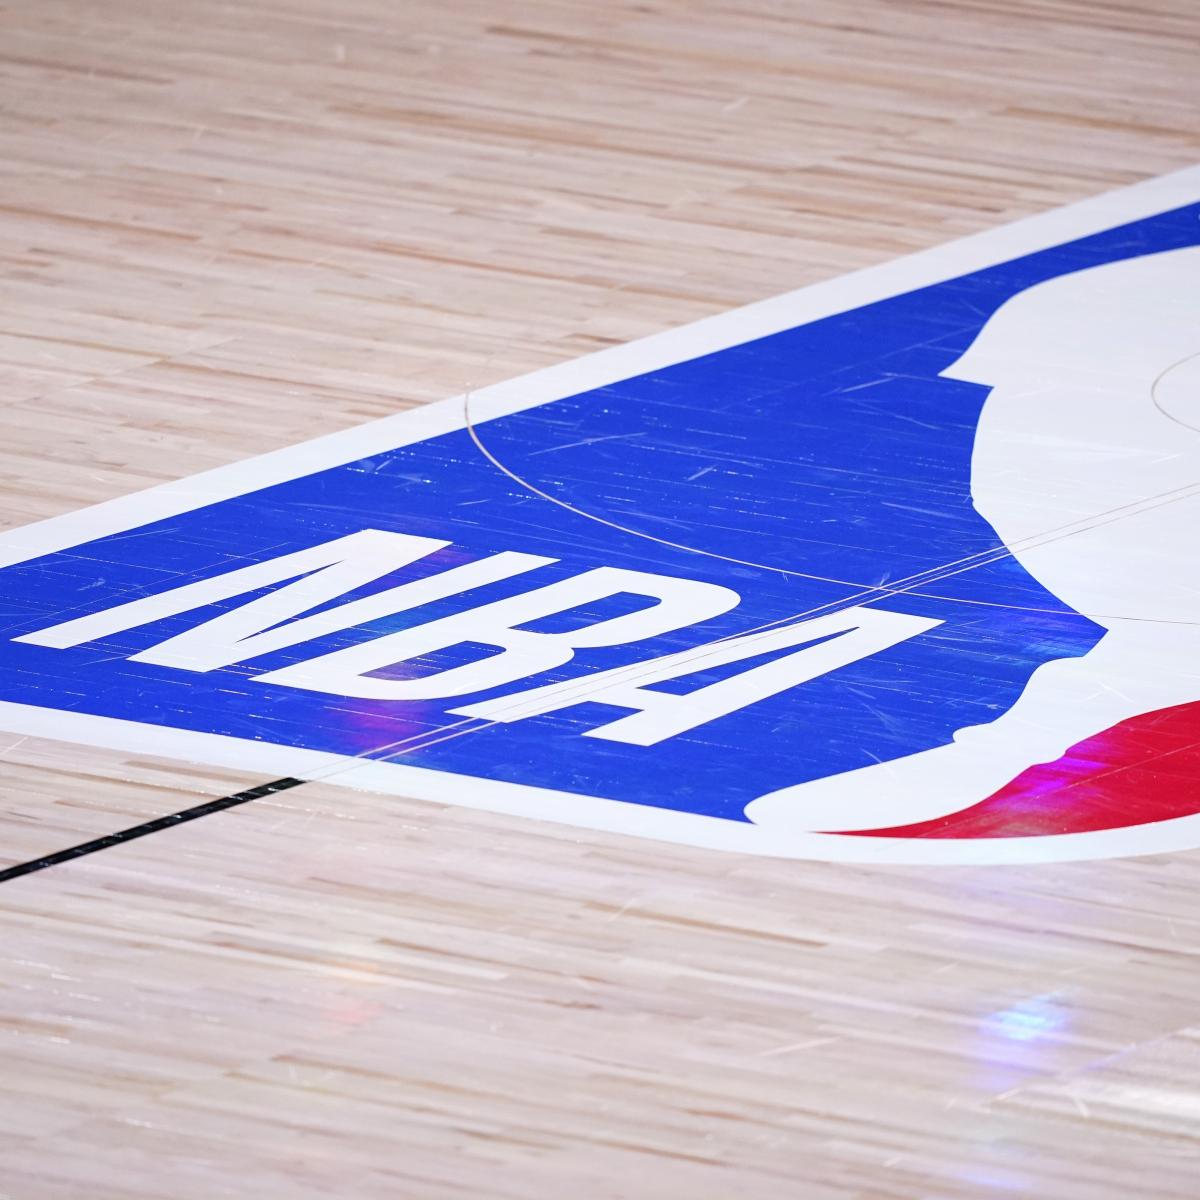 NBA Mock Draft 2020: Full 1st-Round Predictions Based on Latest Rumors